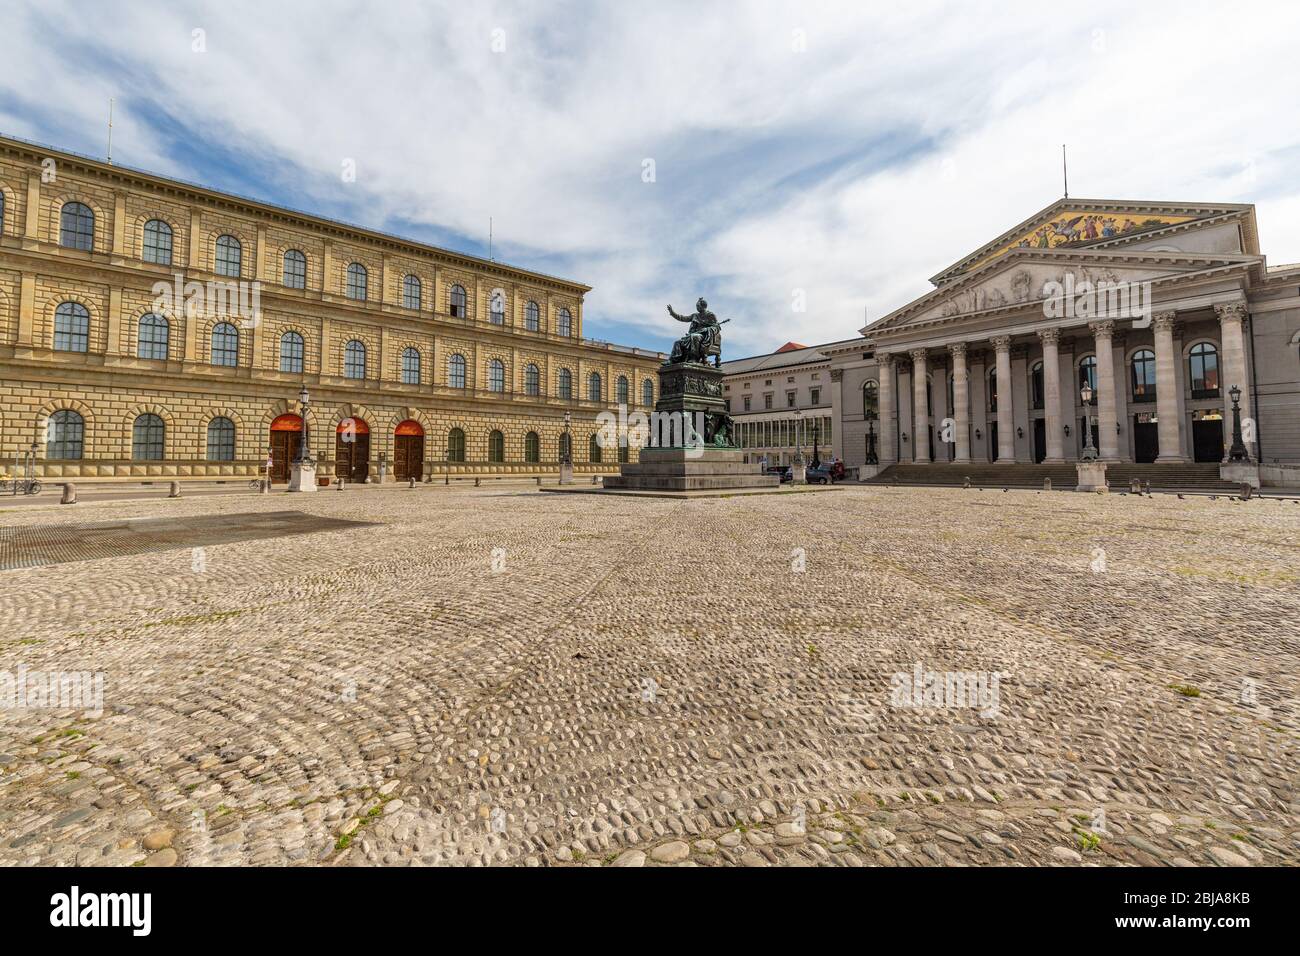 View of Max-Josephs-Platz with Munich Residence (Residenz), Bavarian State Opera (Bayerische Staatsoper) & statue of King Maximilian I. Joseph. Stock Photo